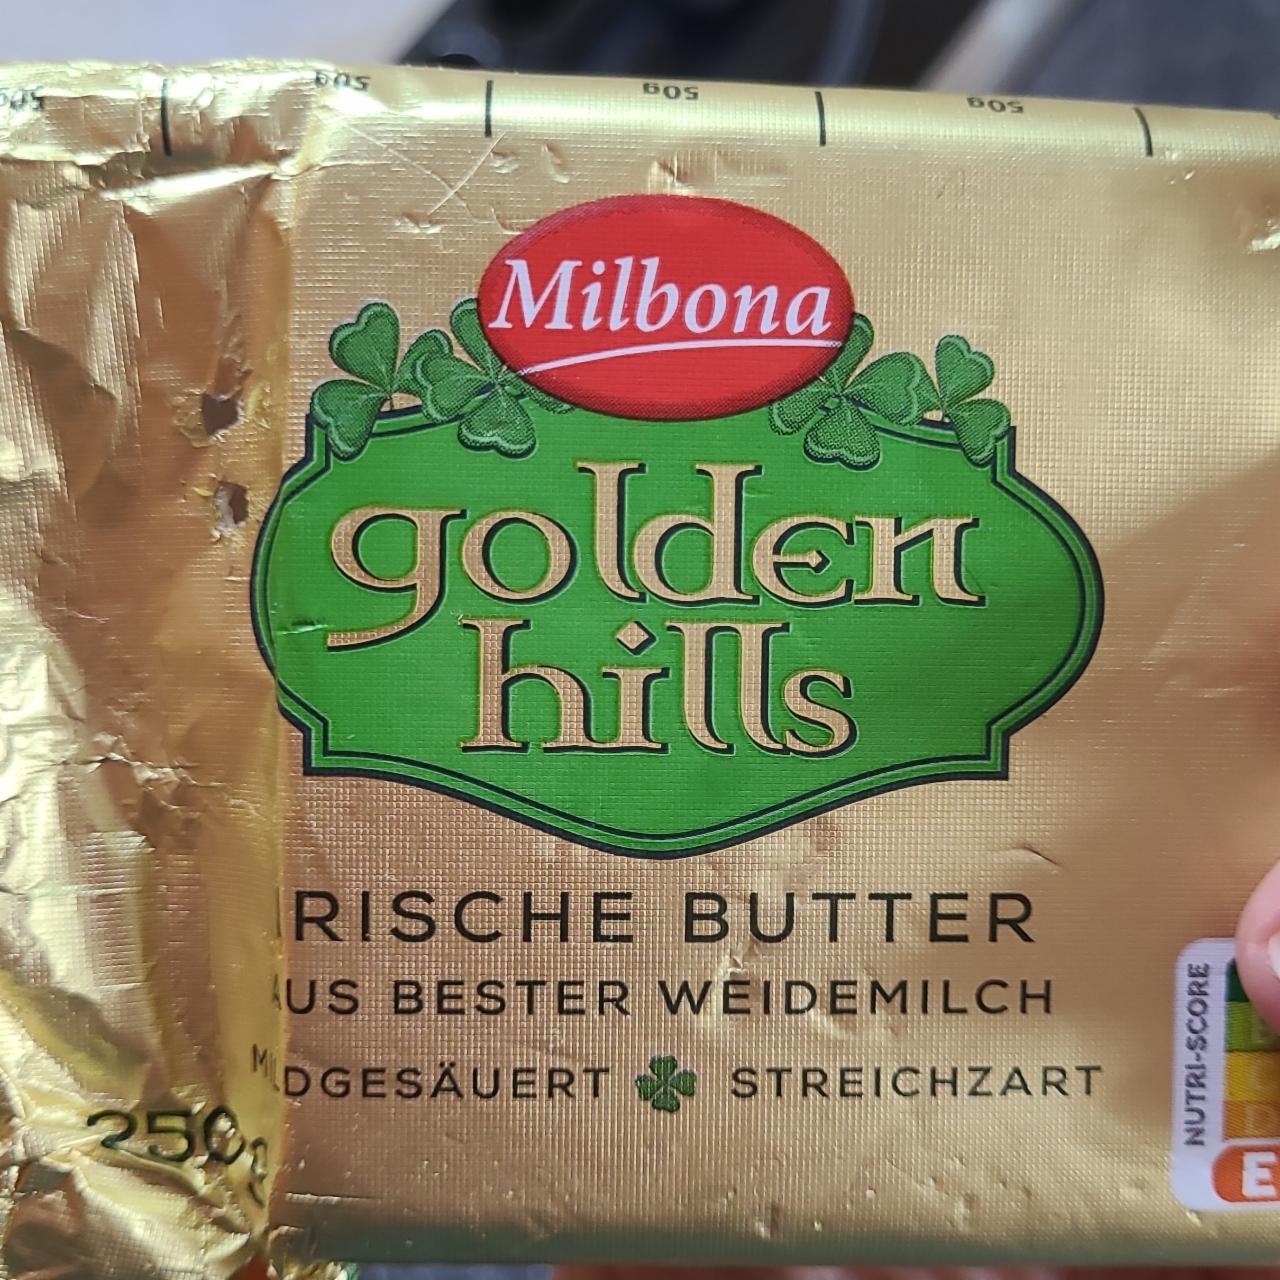 Fotografie - Golden hills Irische Butter Milbona